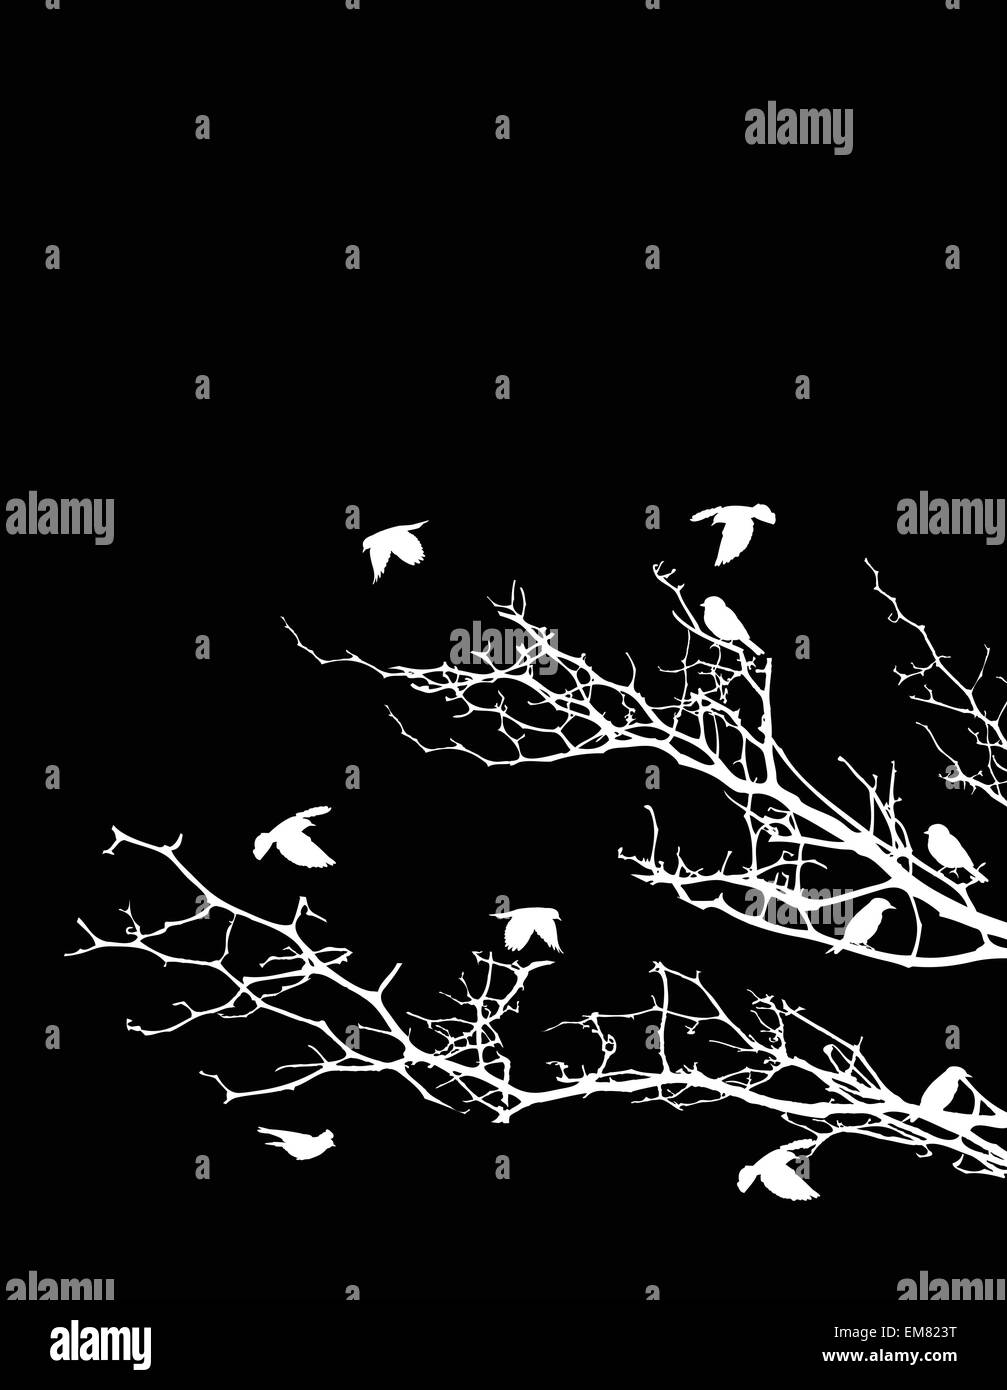 Baum-Silhouette mit Vögel Stock Vektor